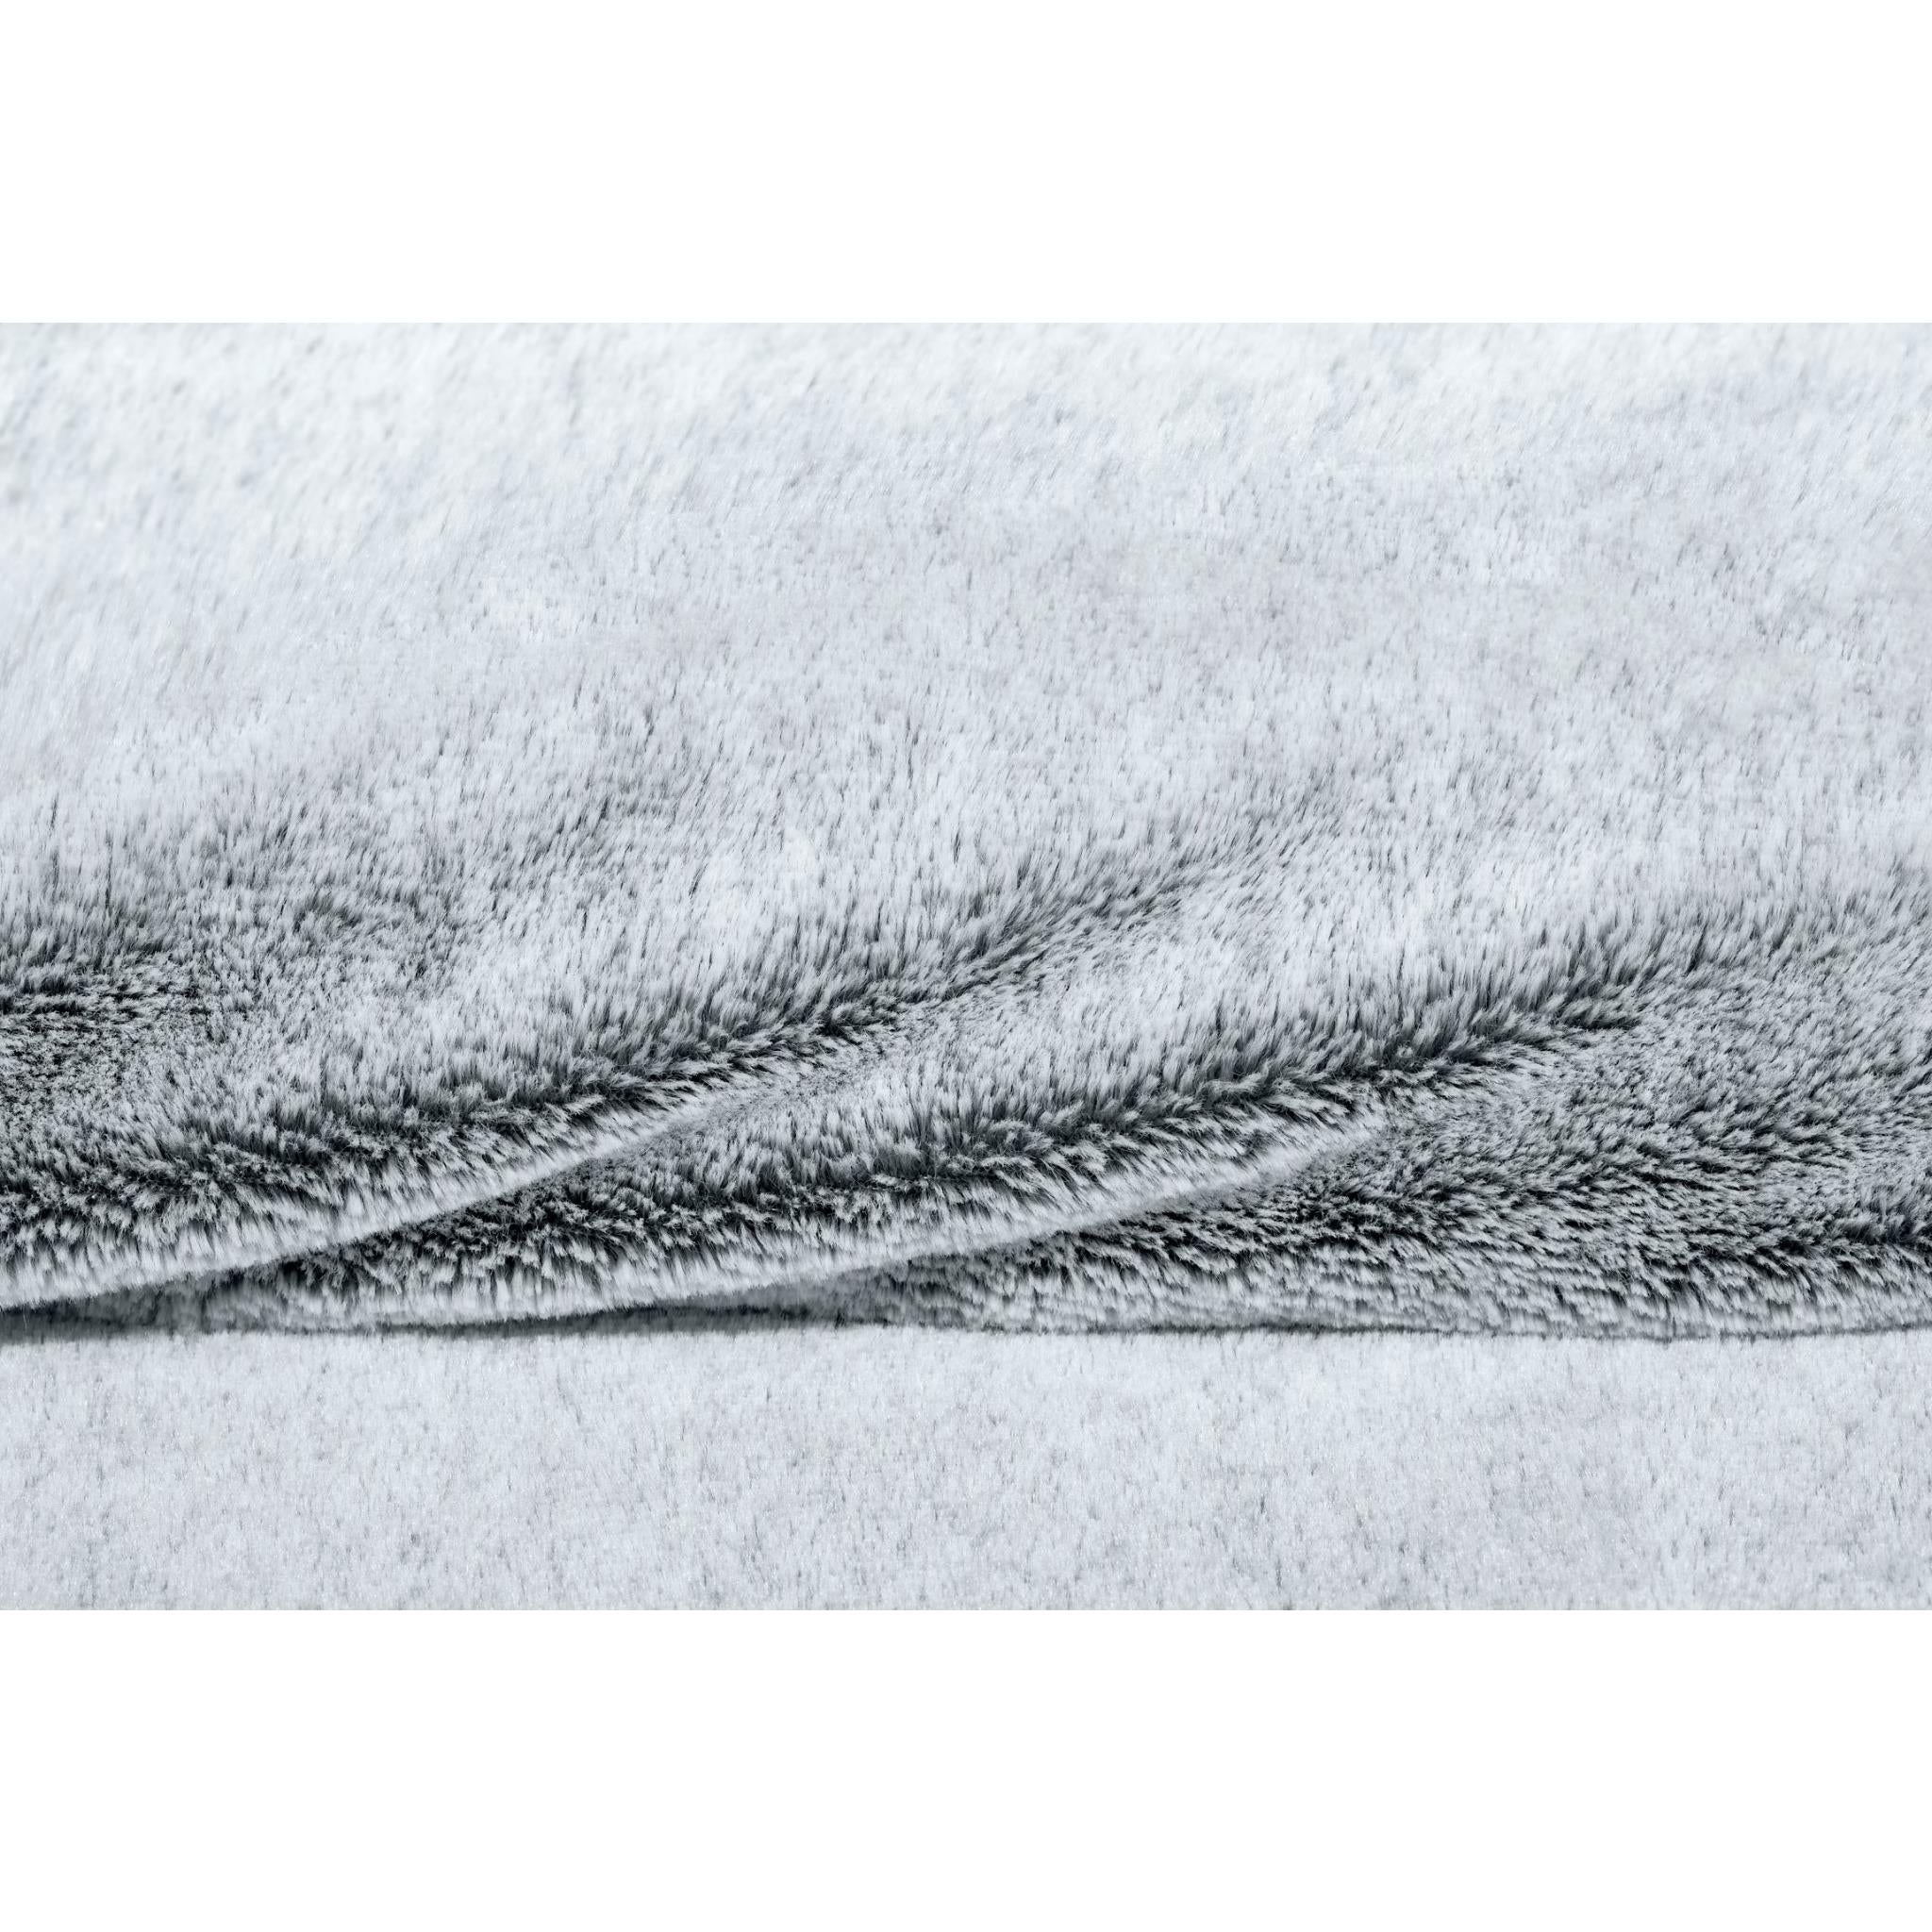 Buerer Heated Over blanket Throw (Cosy Nordic Grey)